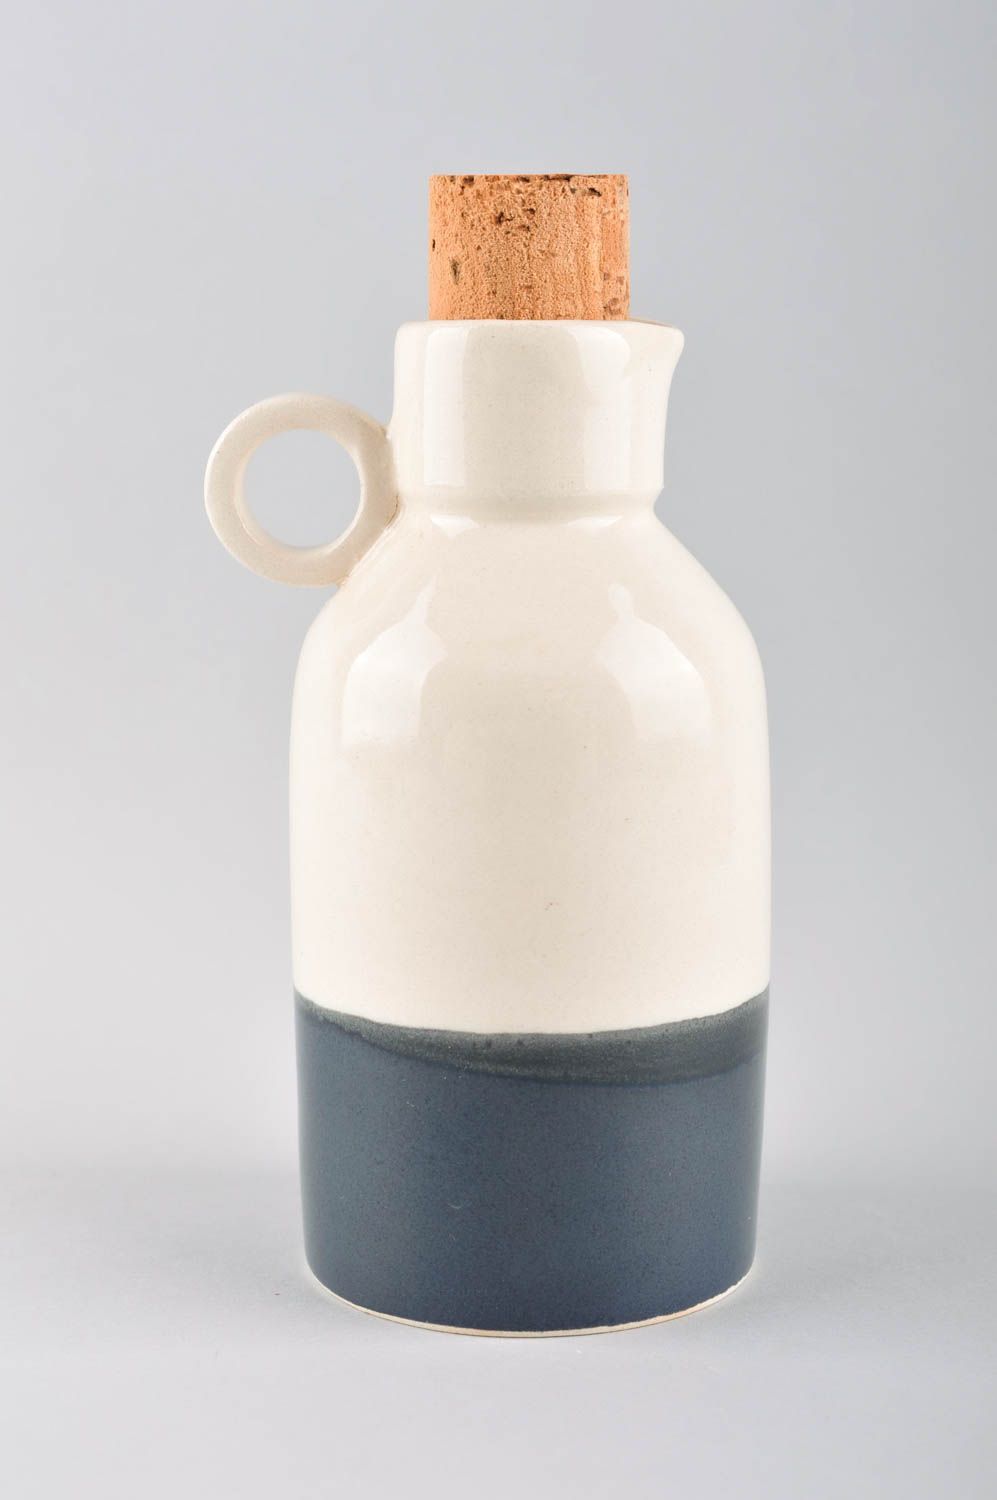 20 oz coffee handmade ceramic pitcher, jug with handle and lid handmade pottery 7, 0,7 lb photo 3